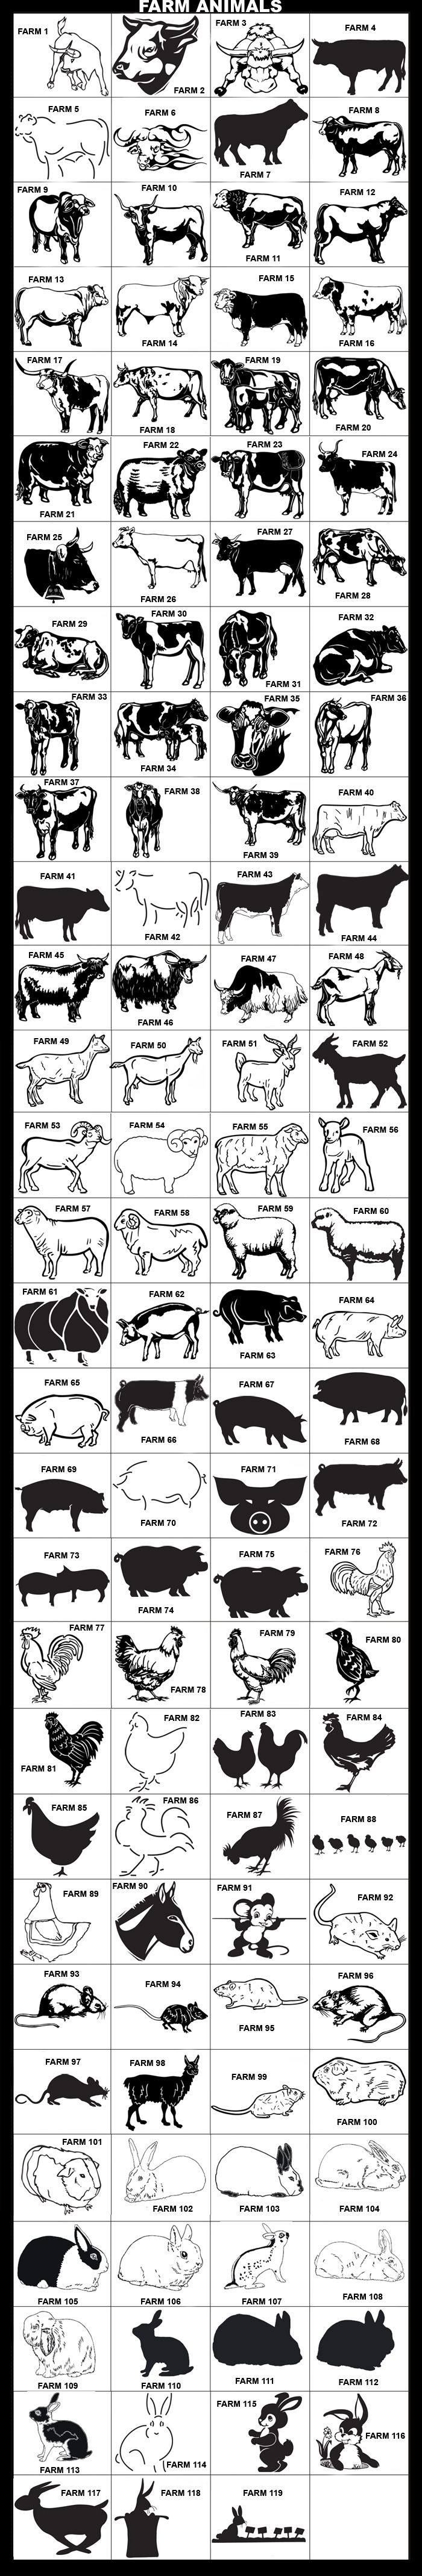 Farm Animal, Bull, Lop-Holland, Aficaner Bull, Brahman, 4-H, Brammer, Longhorn